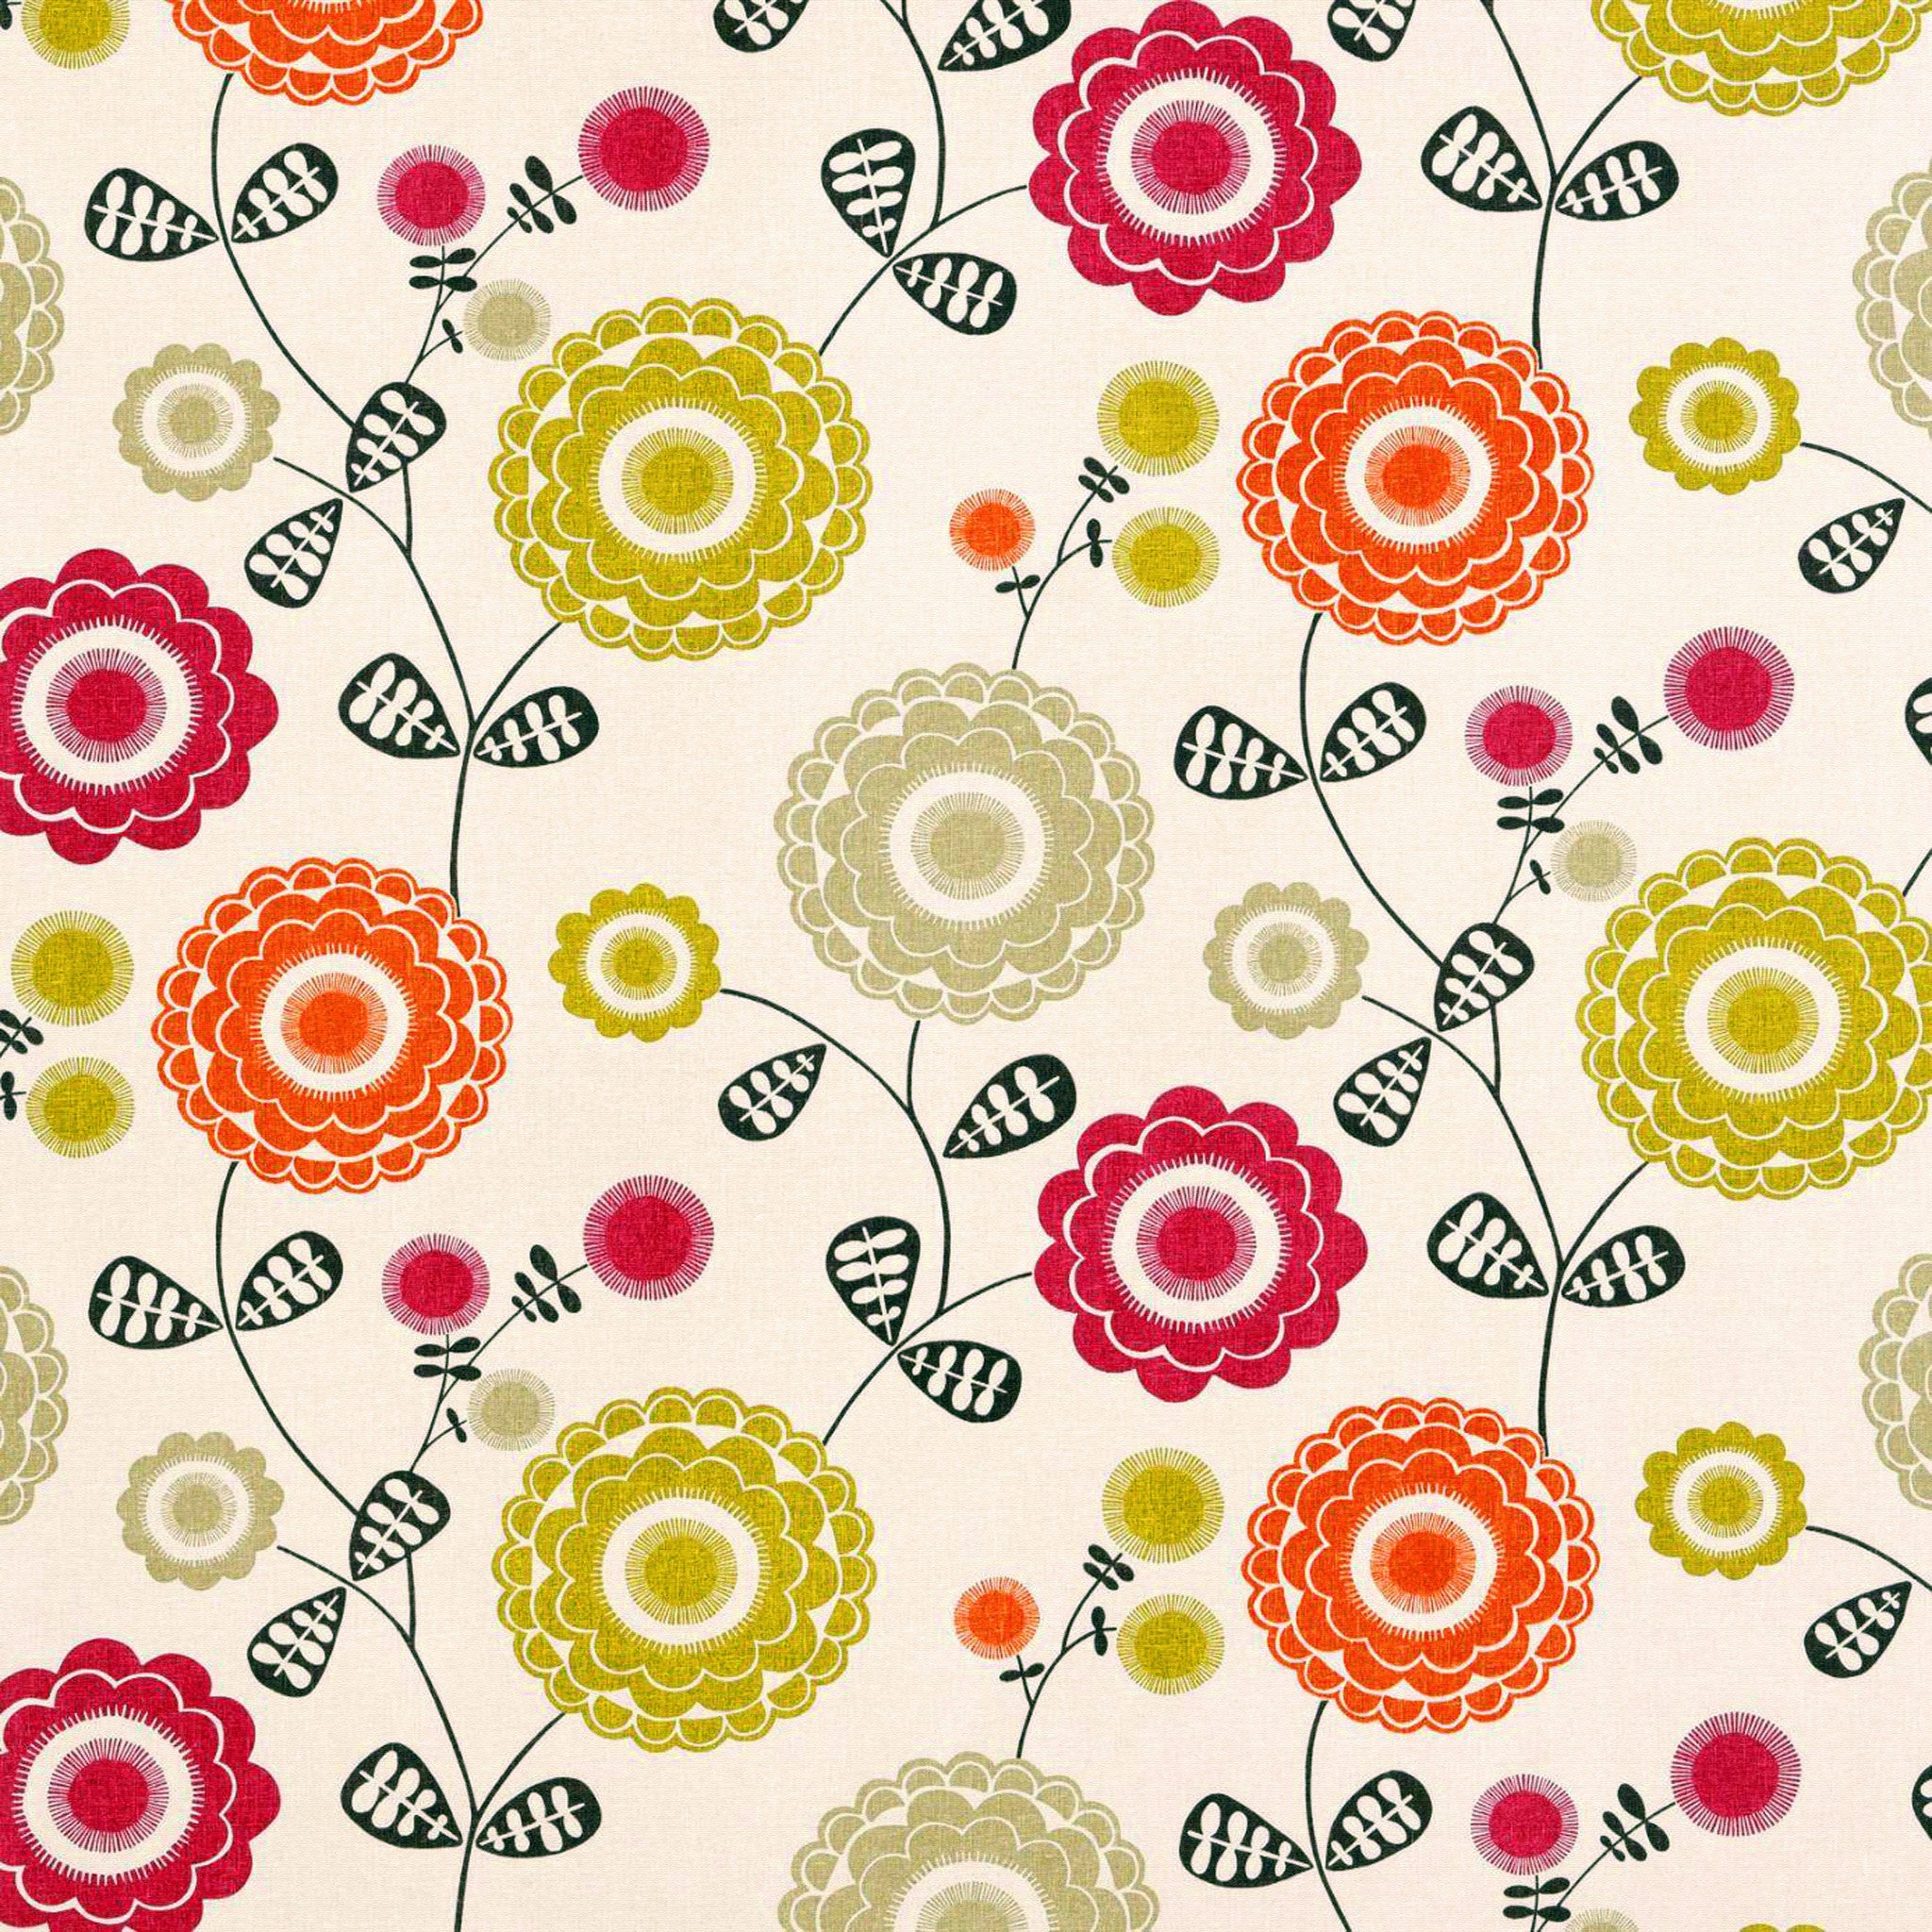 Watercolor floral craft patterned vinyl sheet - HTV / heat